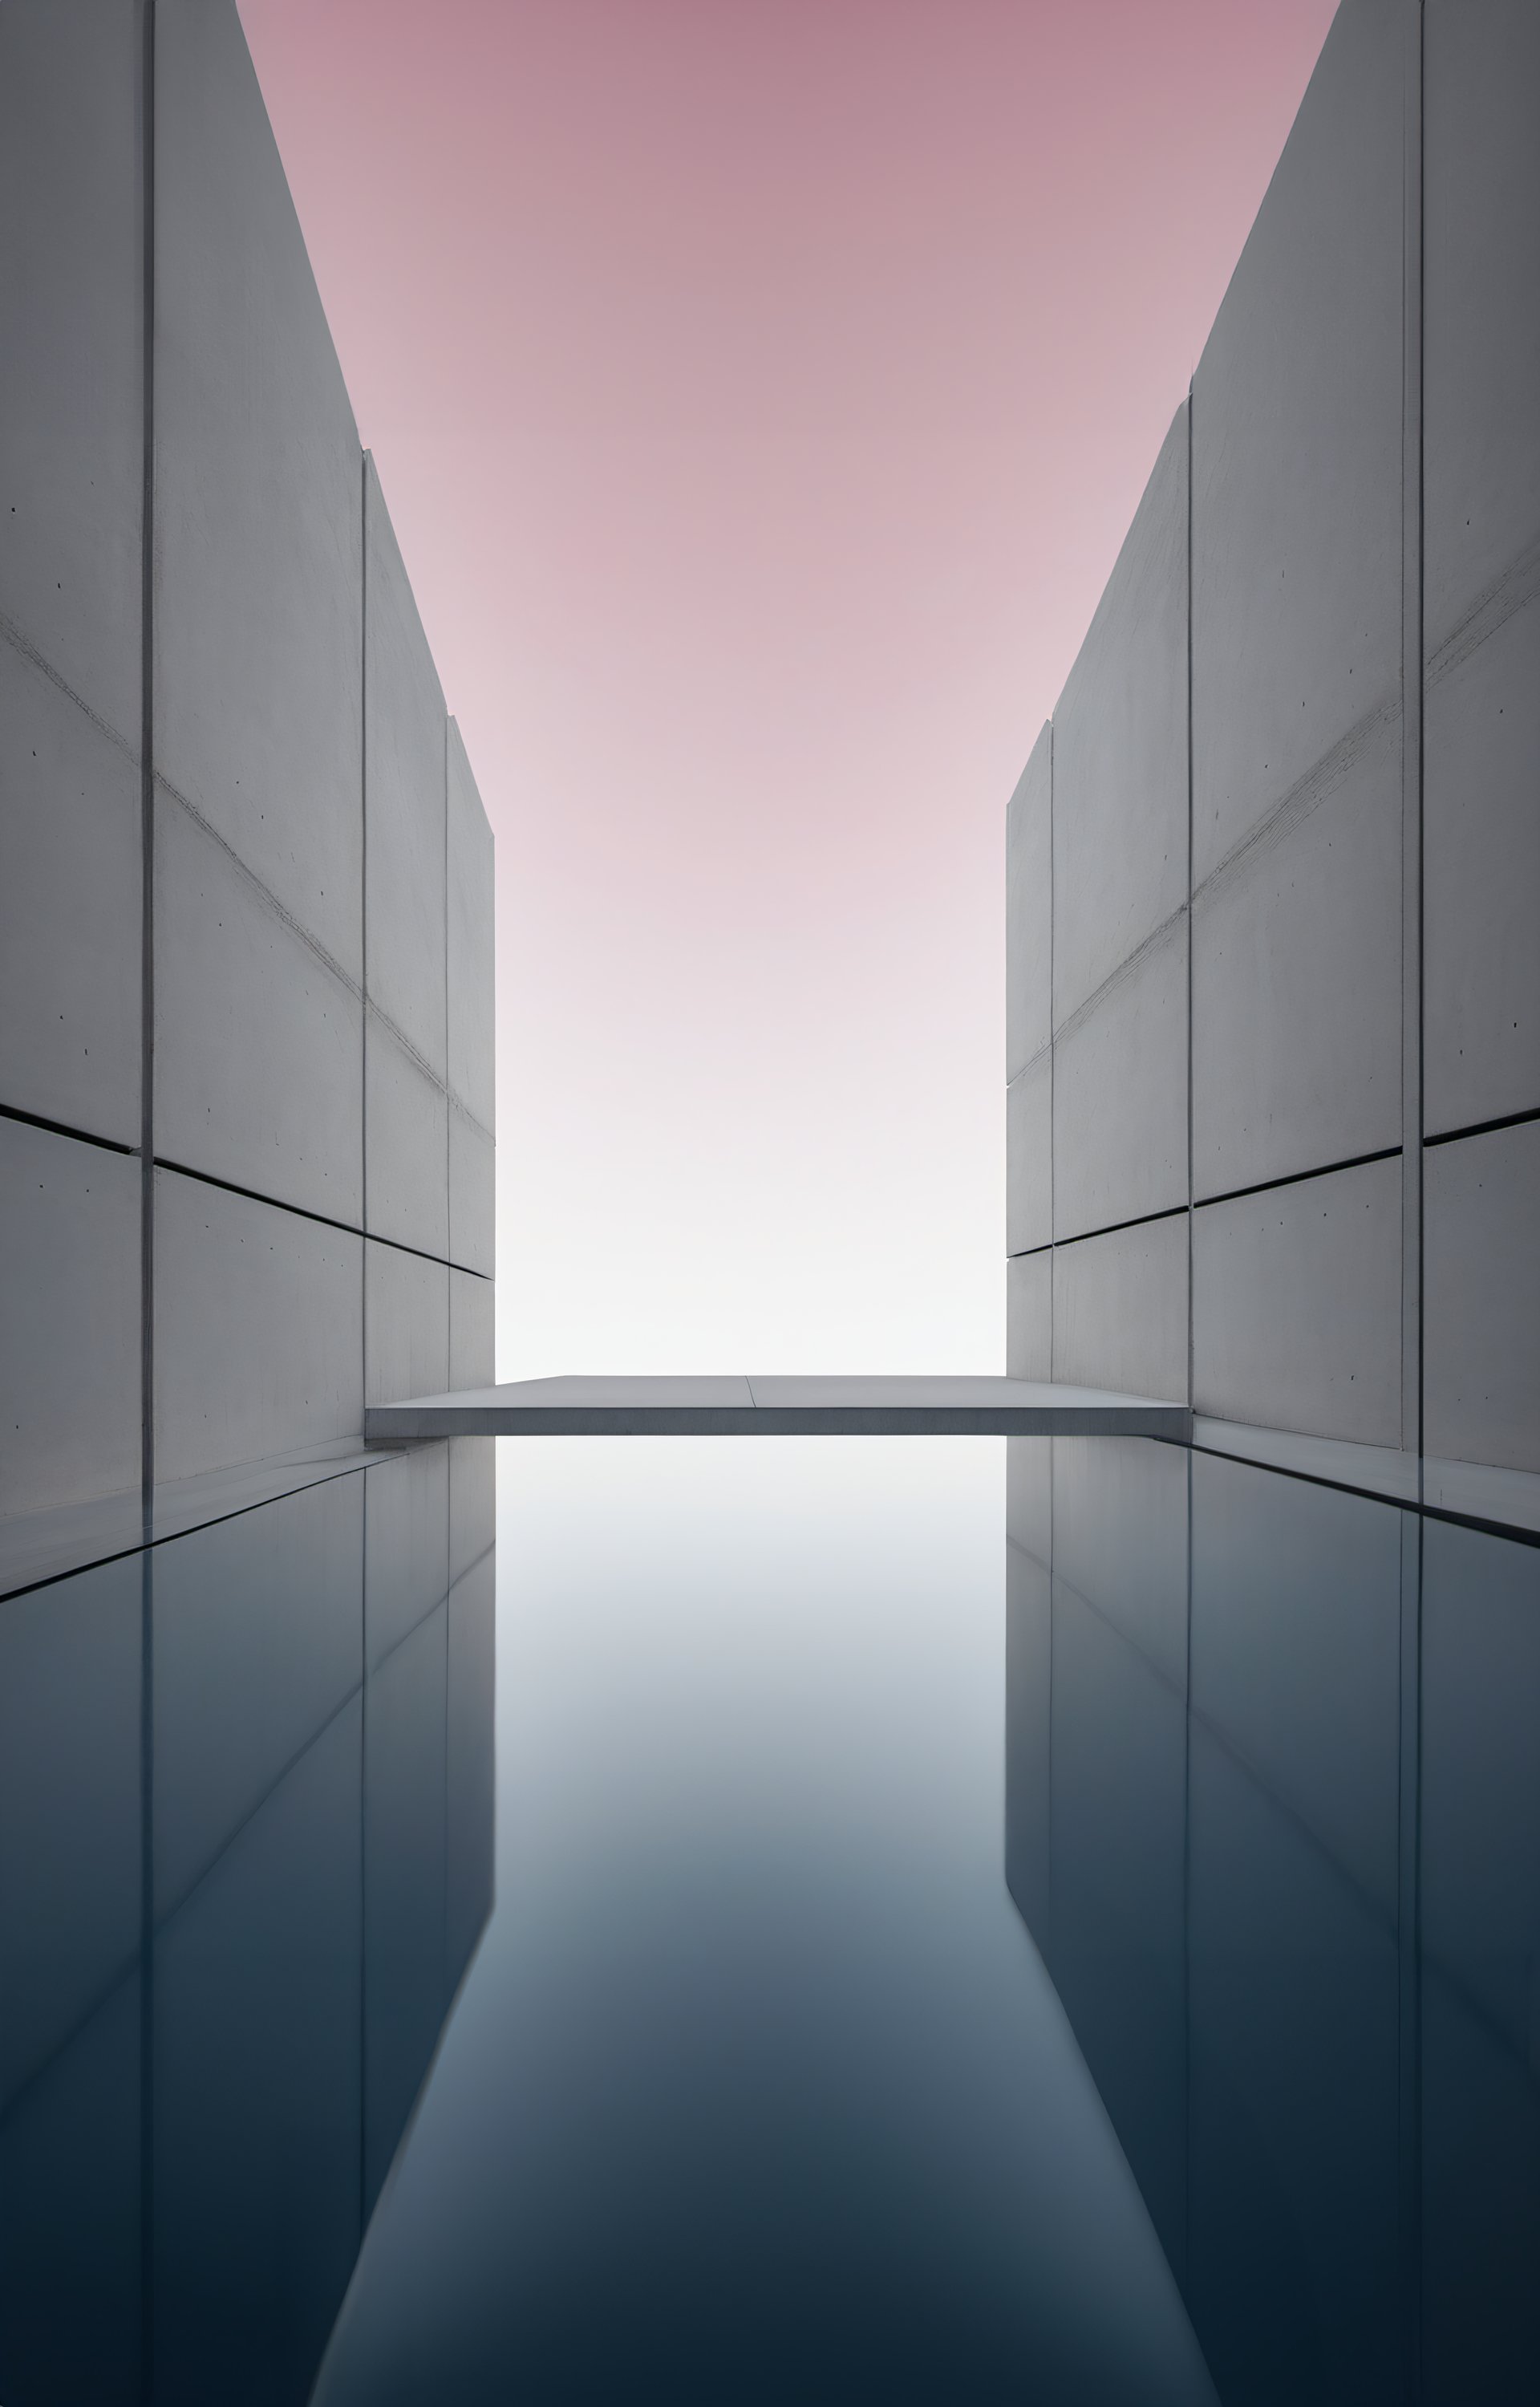 parallel walls against gradient sky